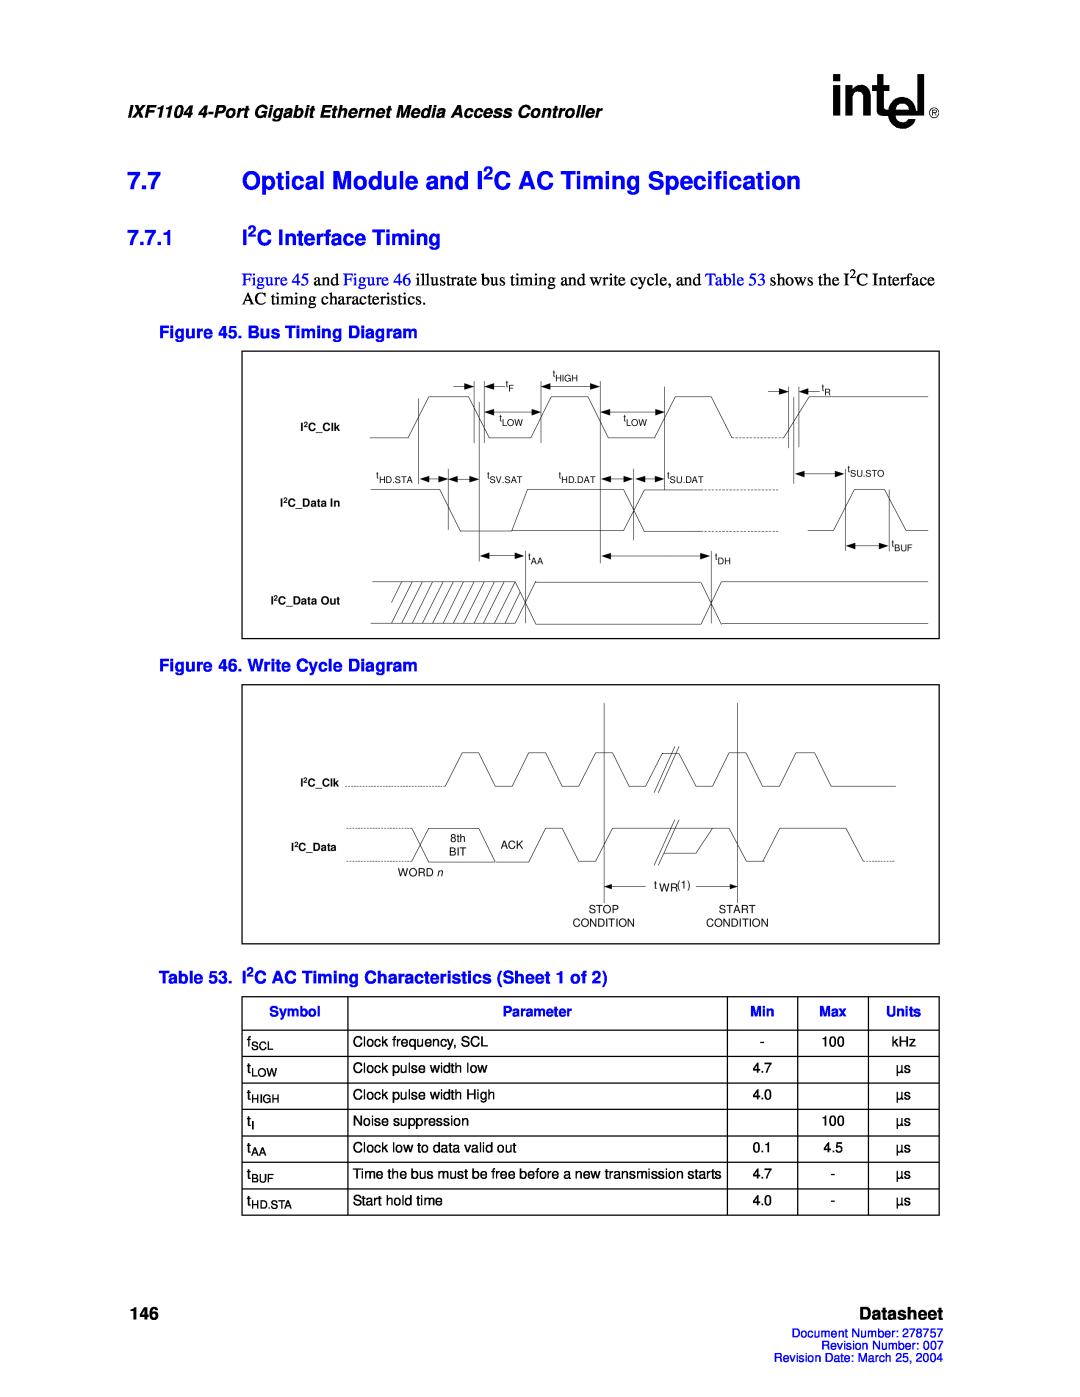 Intel IXF1104 manual 7.7Optical Module and I2C AC Timing Specification, 7.7.1I2C Interface Timing, Datasheet 